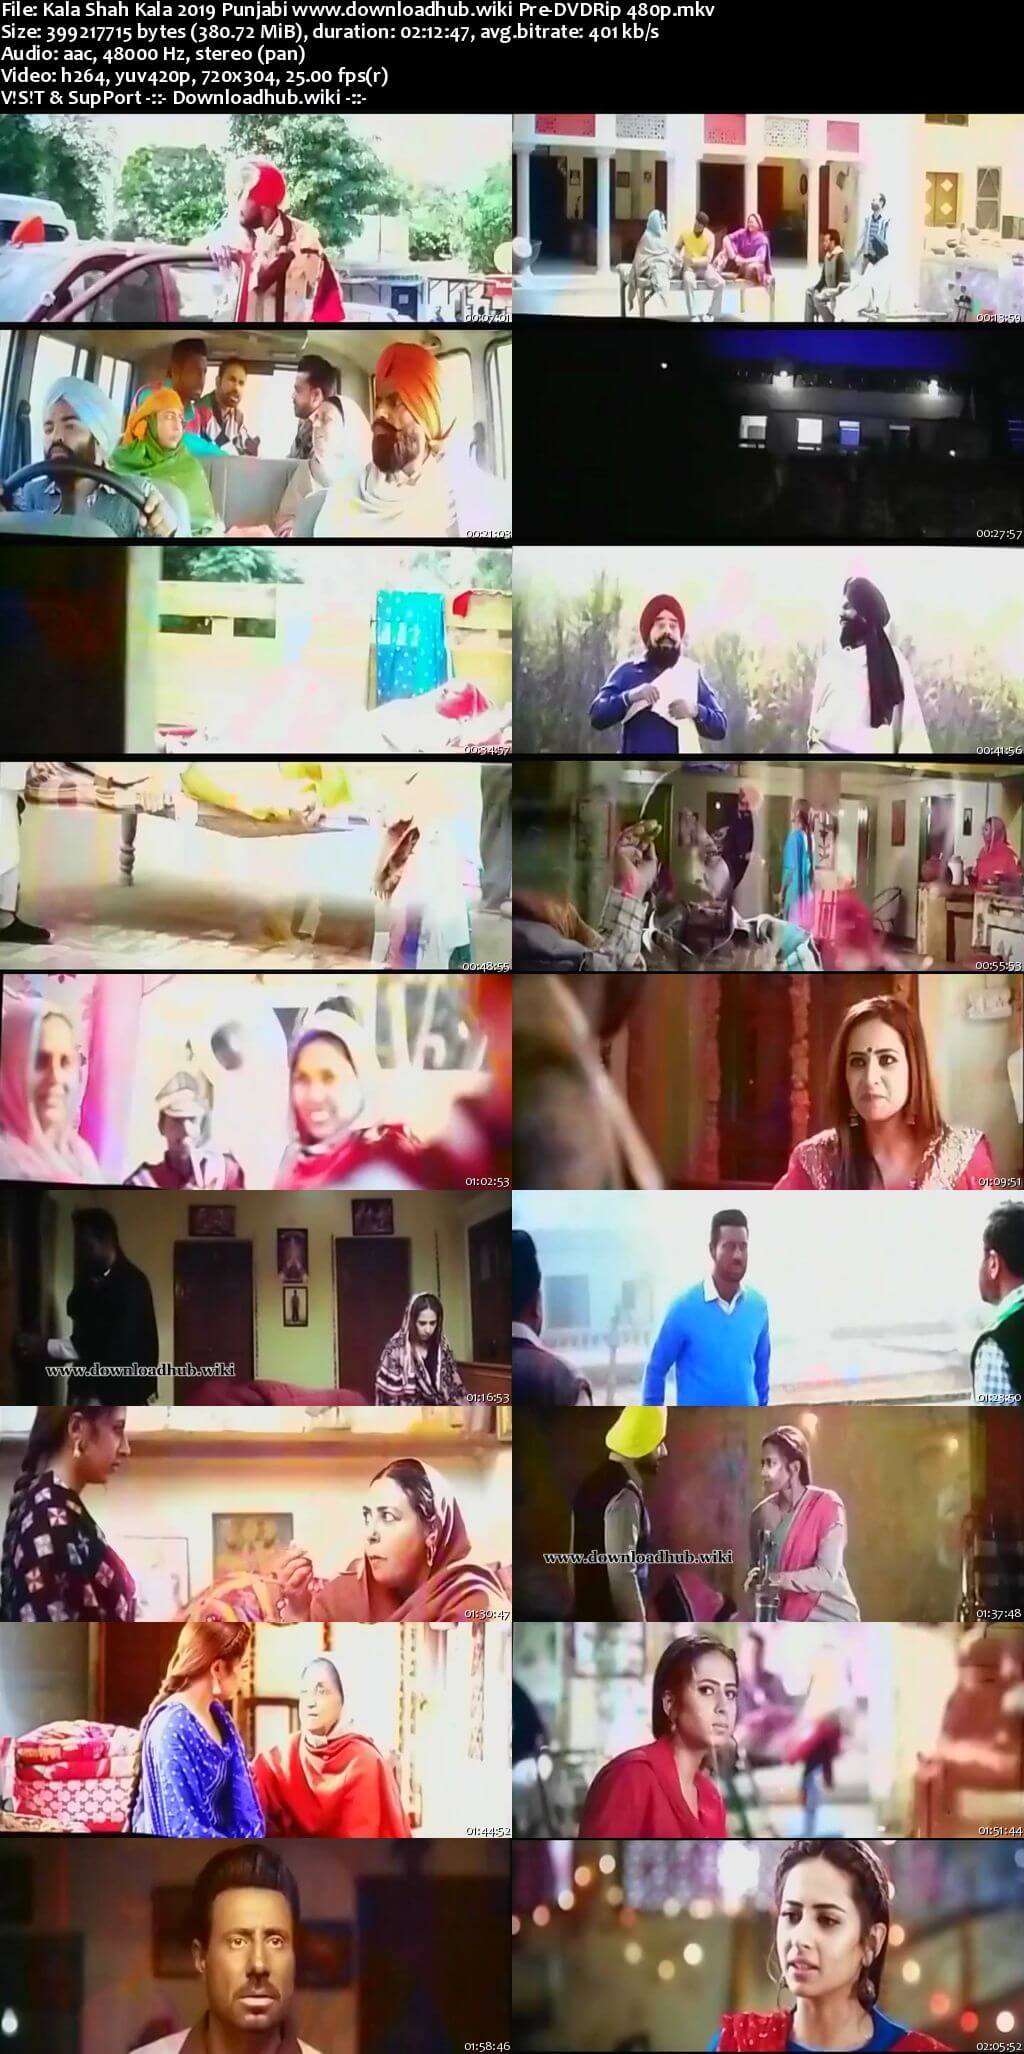 Kala Shah Kala 2019 Punjabi 350MB Pre-DVDRip 480p